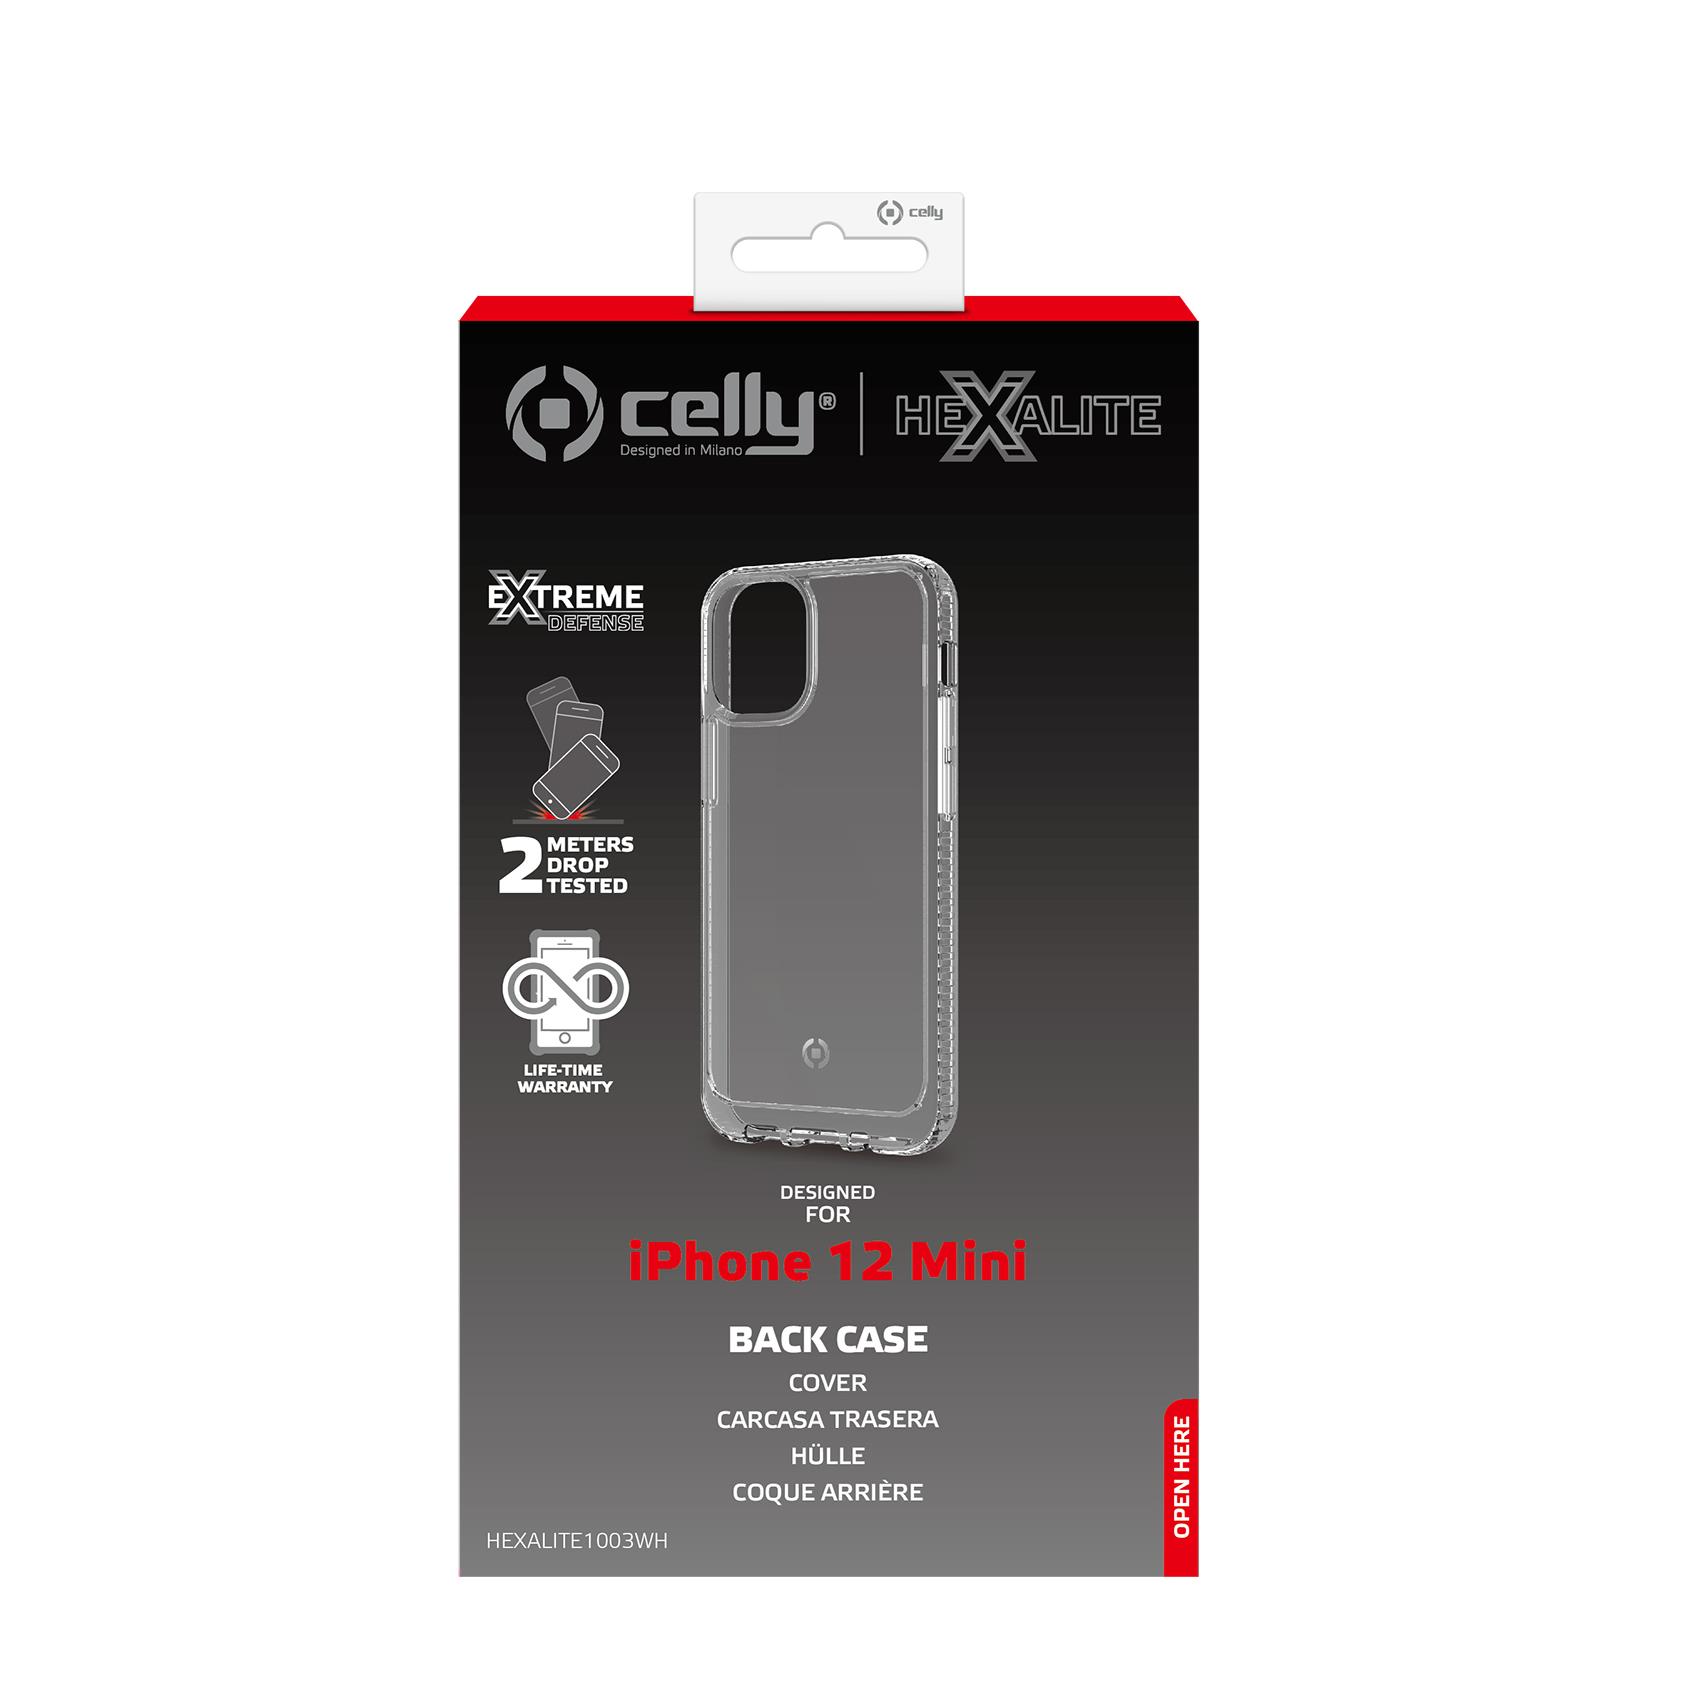 Hexalite Iphone 12 Mini Wh Celly Hexalite1003wh 8021735761648